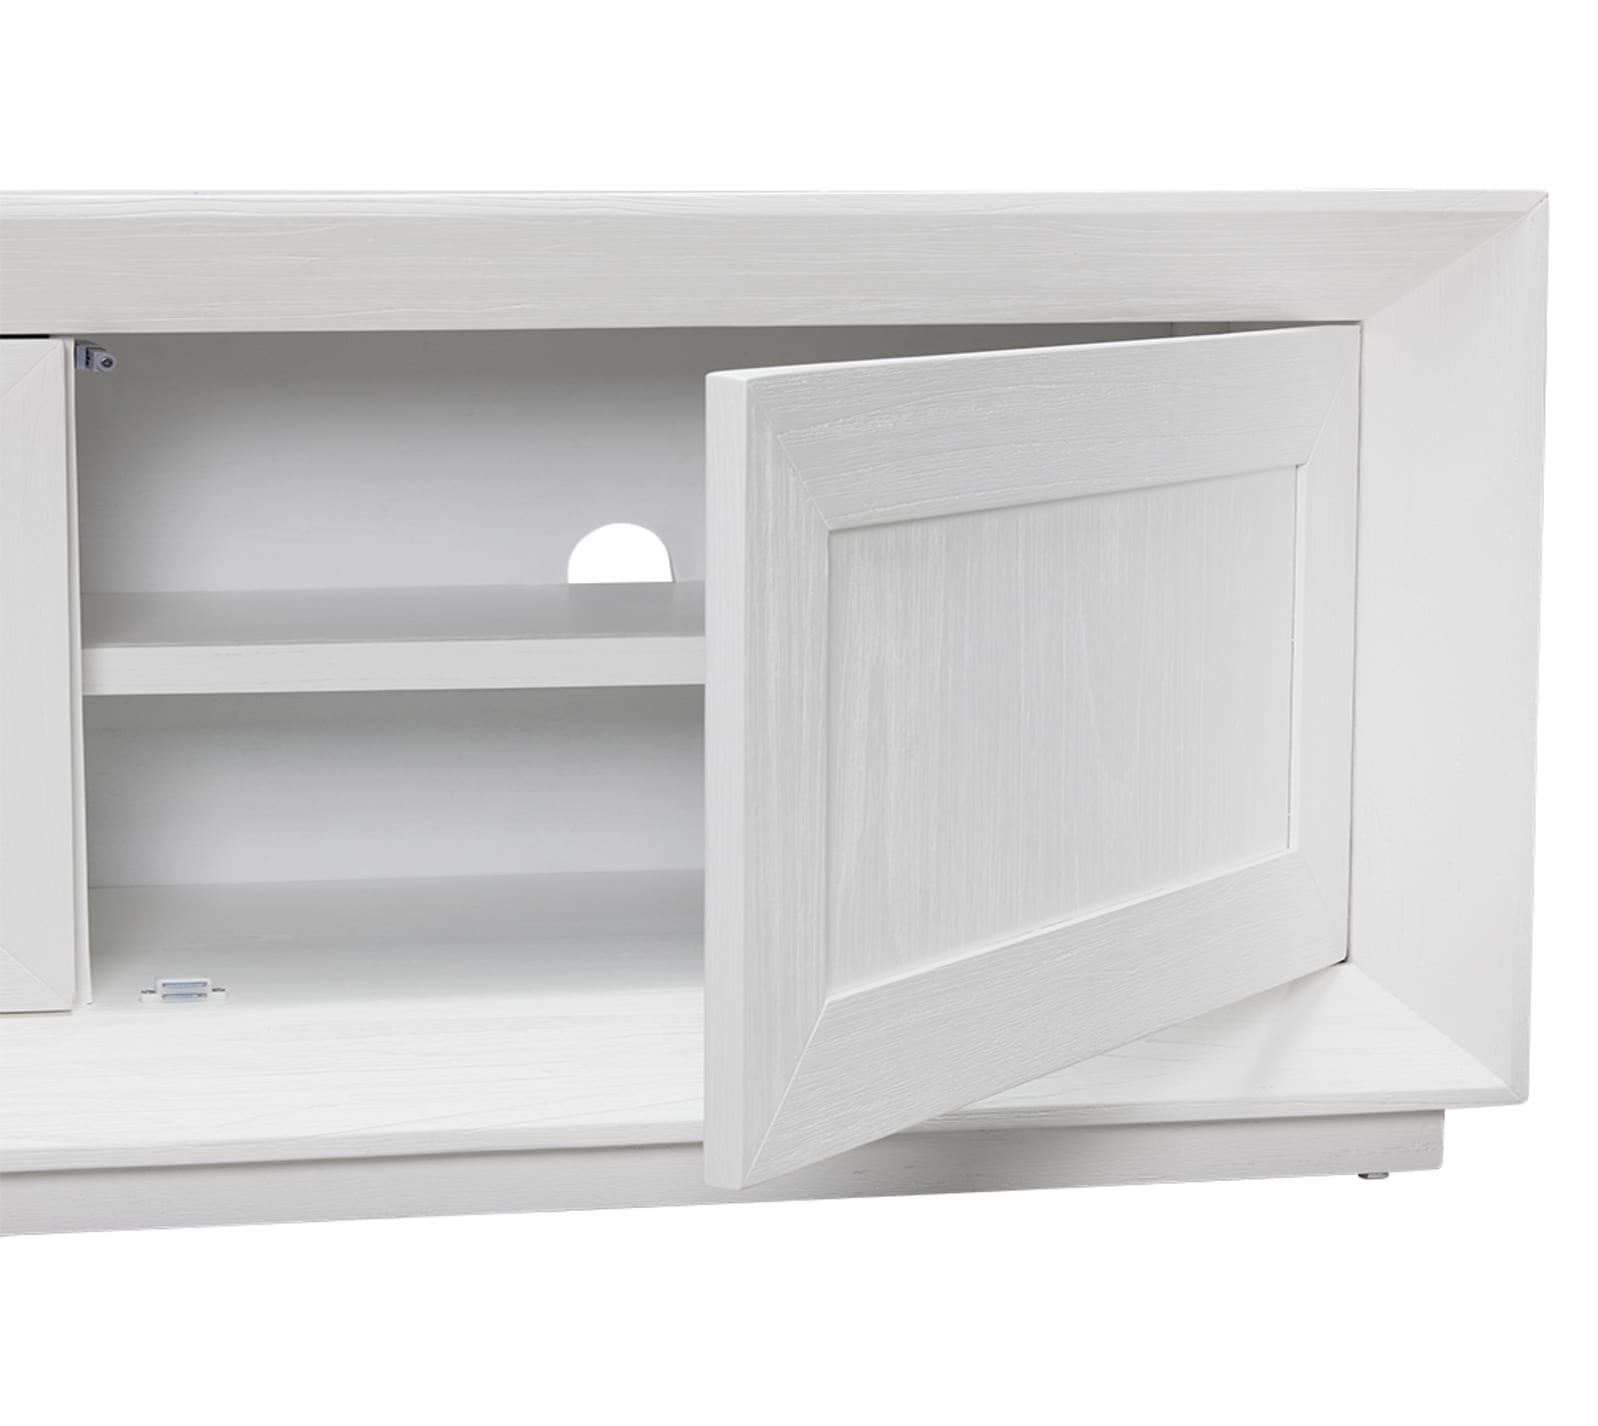 Balmain TV Unit - 3 Door White 228x50x60cm-Furniture-Elme Living-The Bay Room